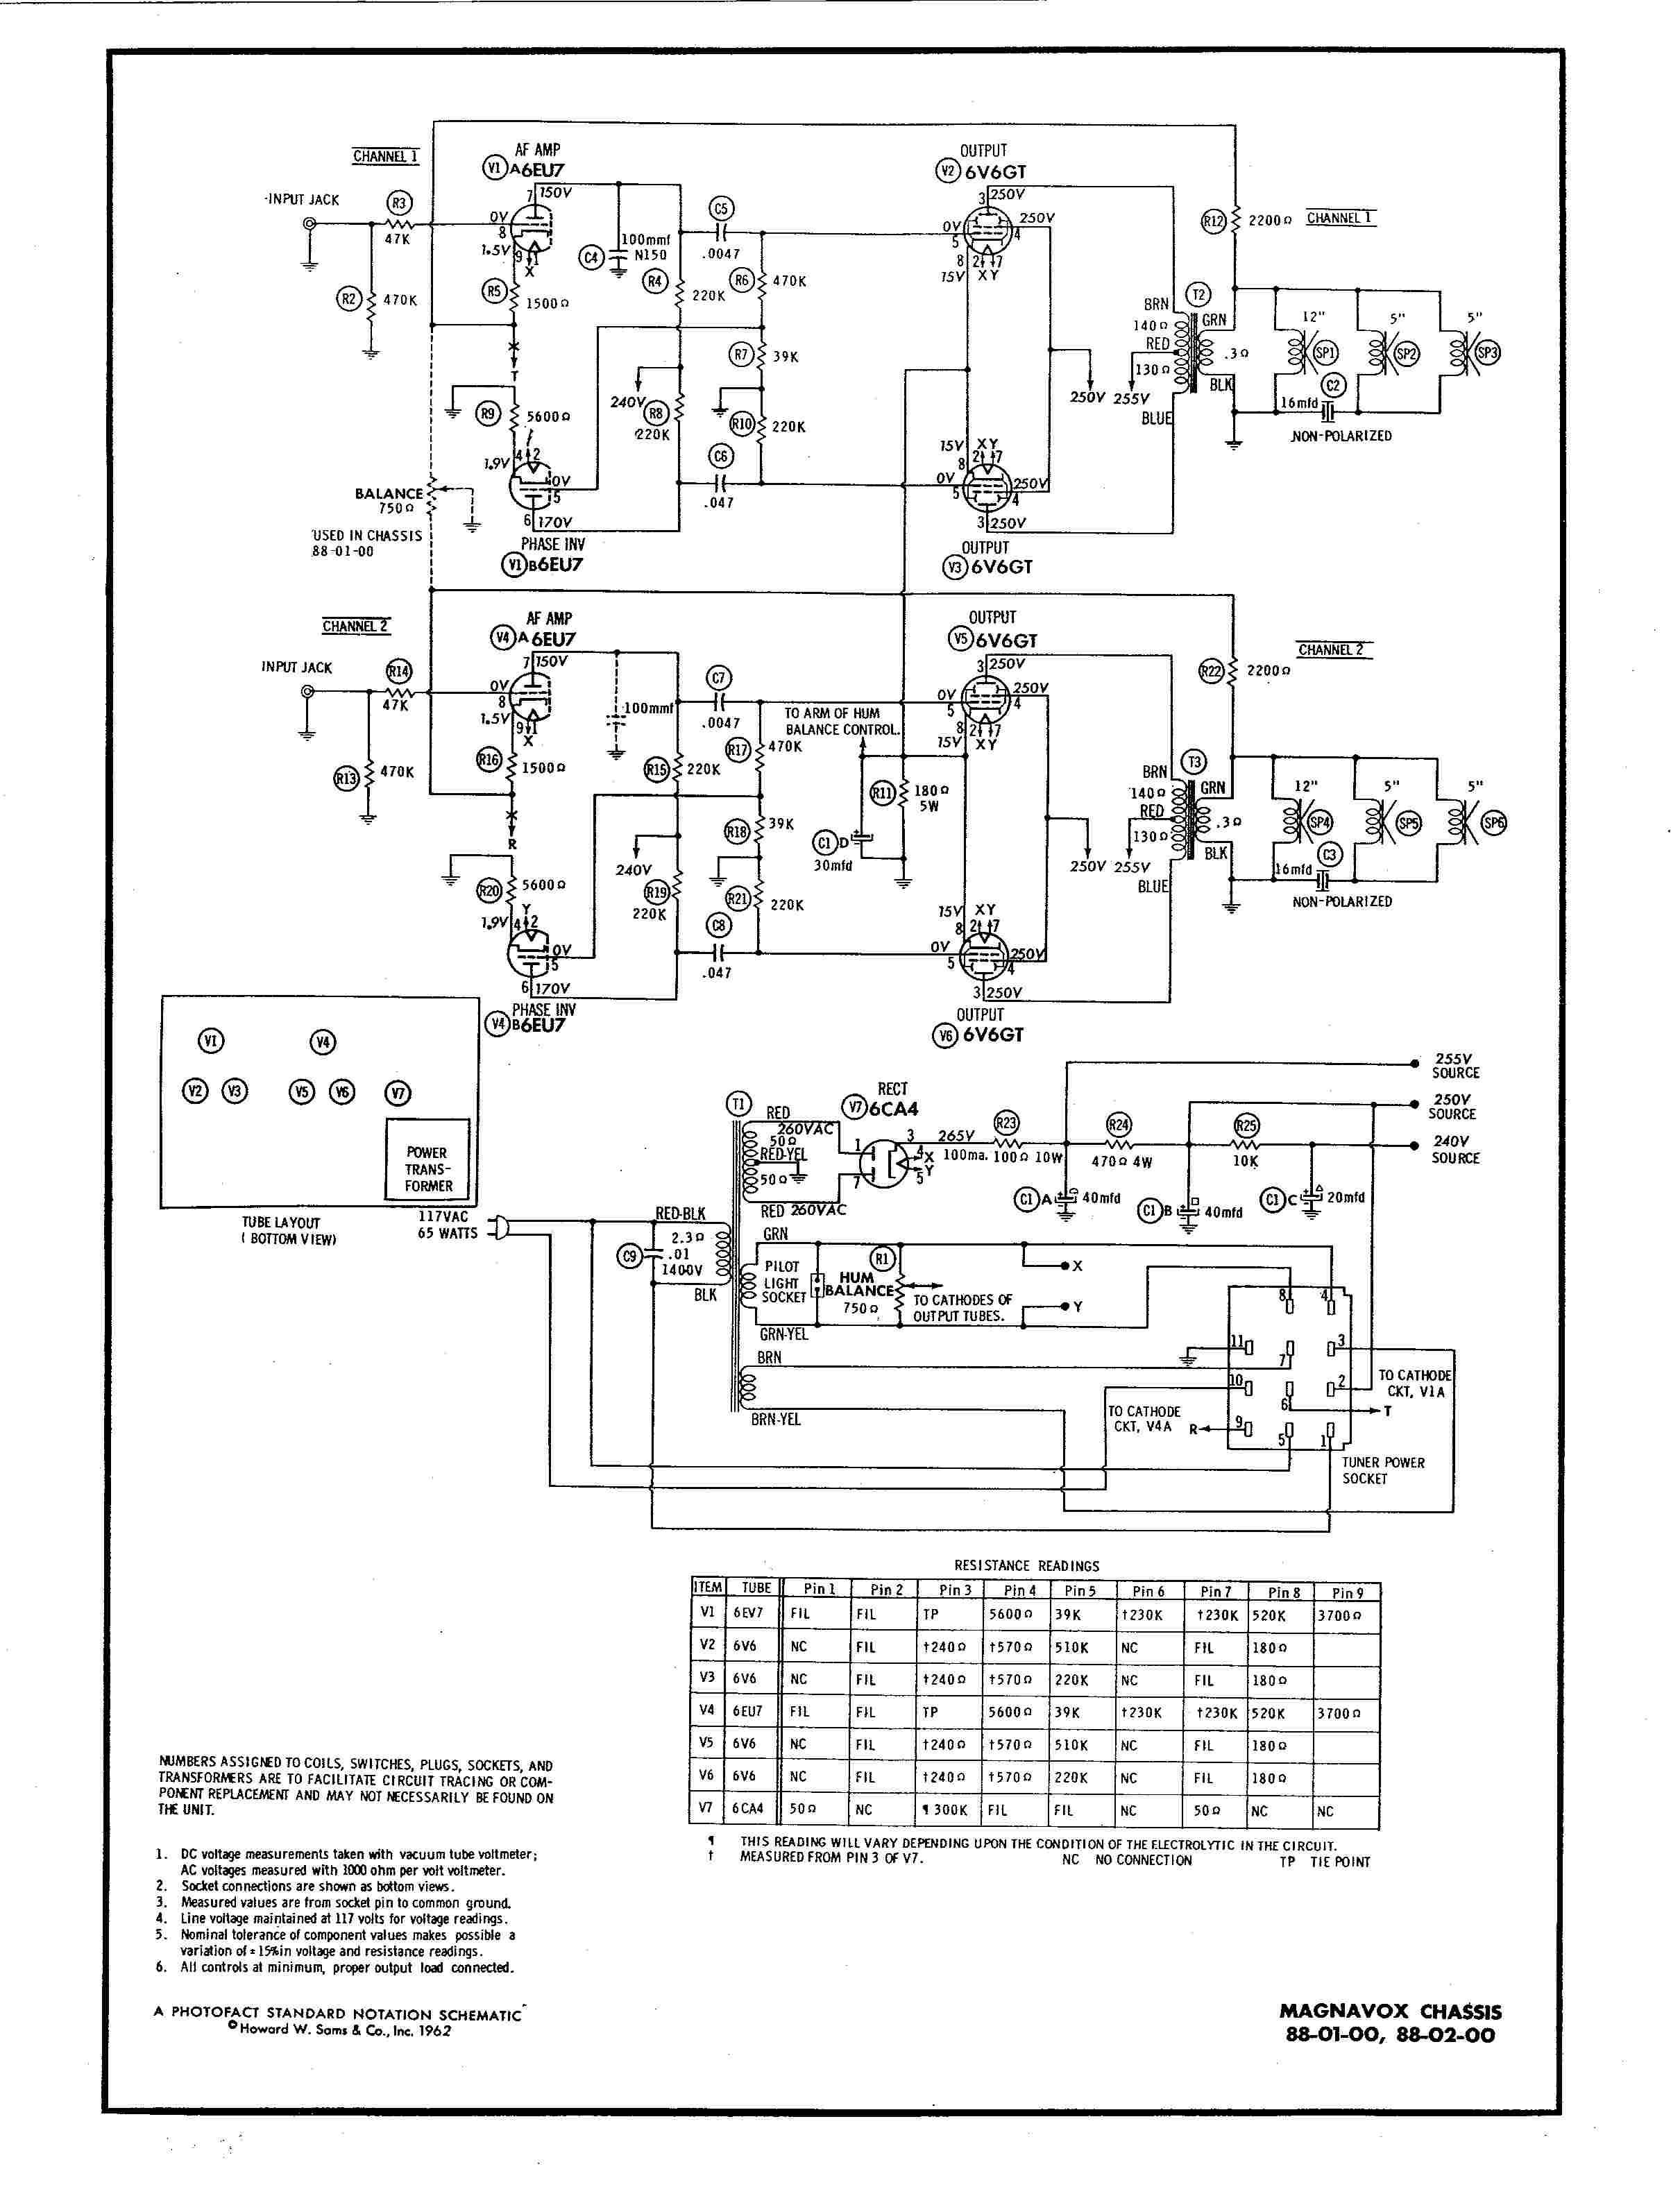 Magnavox Wiring Diagram | Wiring Library